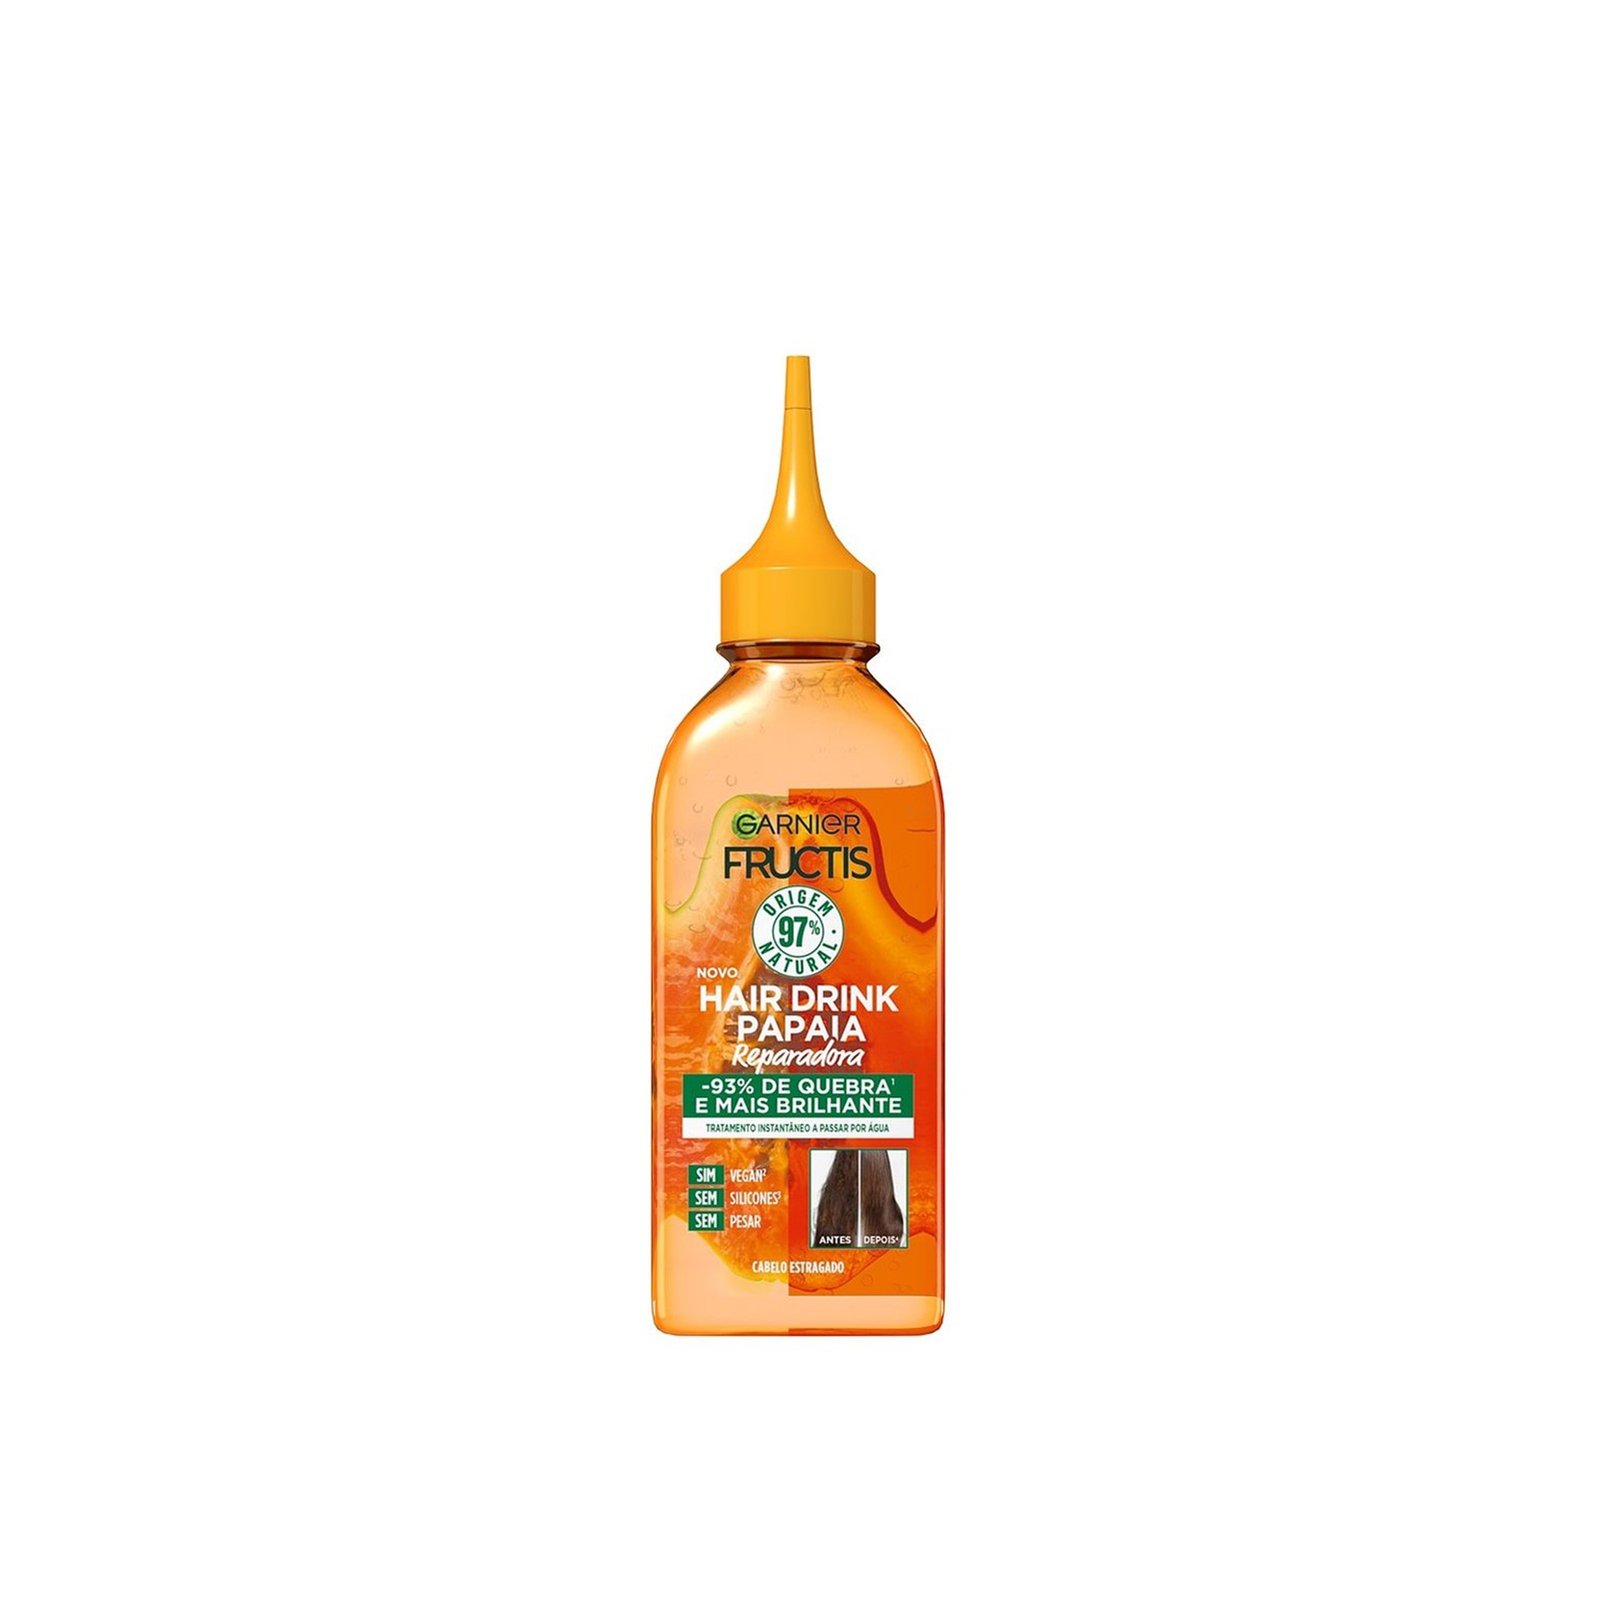 Garnier Fructis Hair Drink Papaya Repairing Instant Lamellar Treatment 200ml